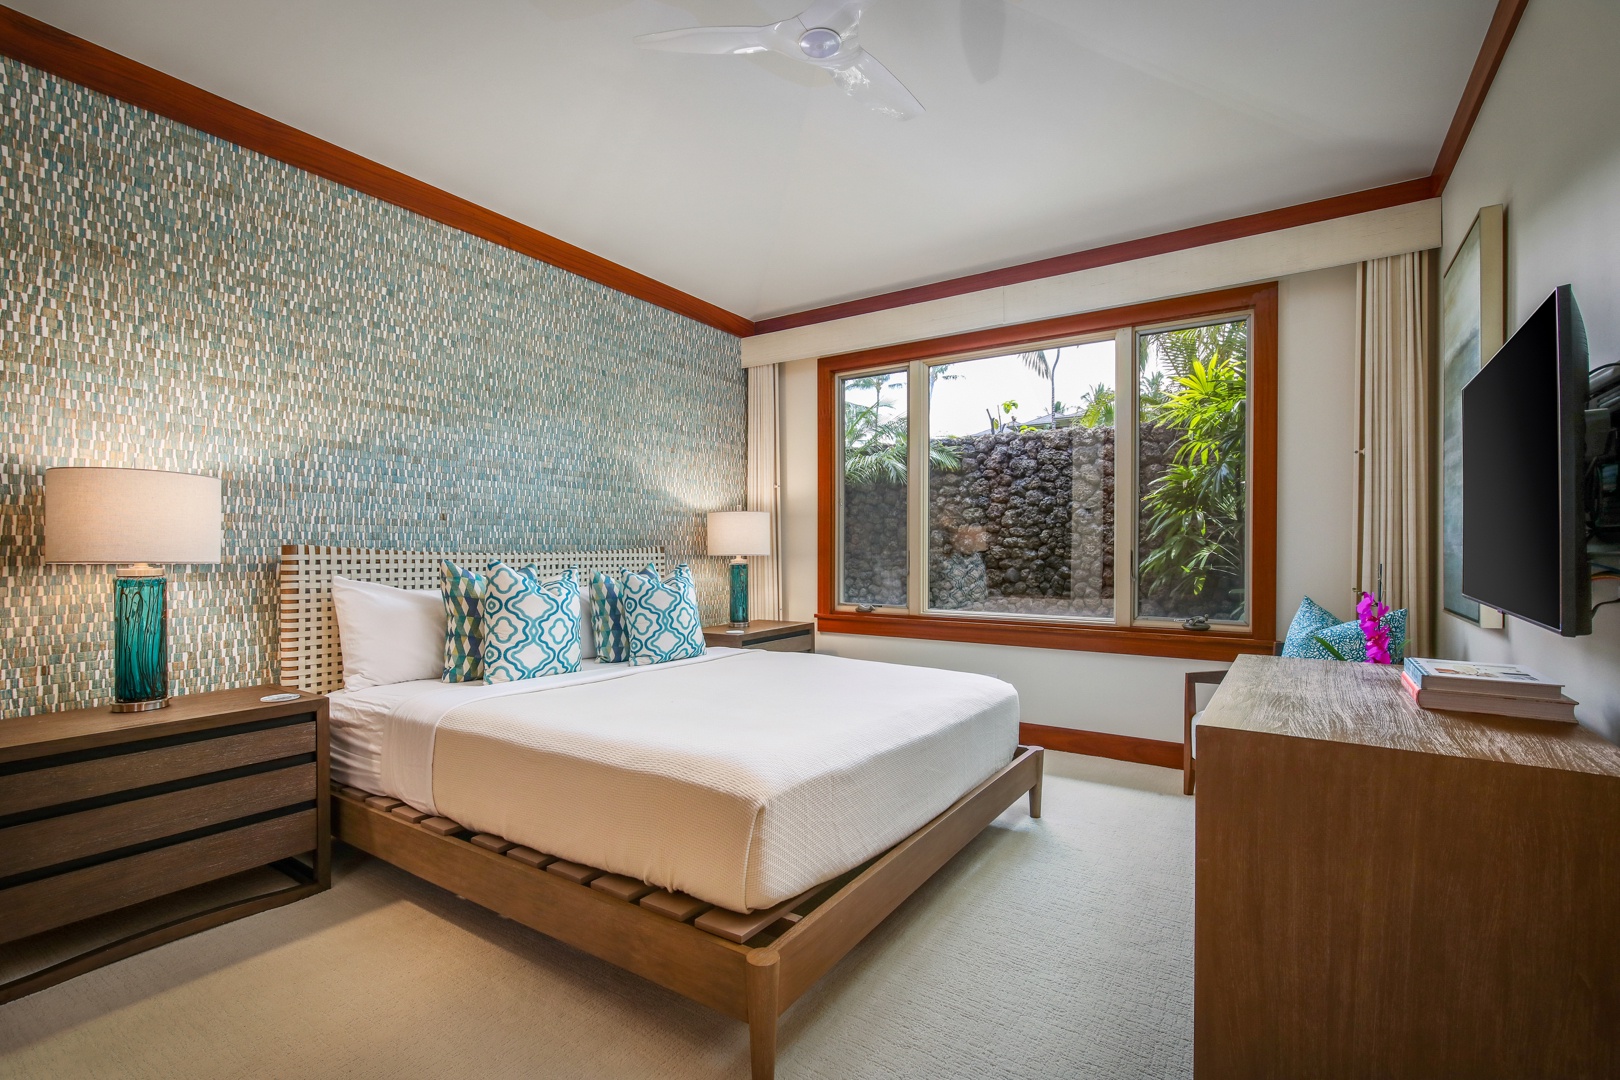 Kailua Kona Vacation Rentals, 4BD Hainoa Estate (122) at Four Seasons Resort at Hualalai - Guest Room 3 with king bed, garden views, Smart flat screen television and en suite bath.